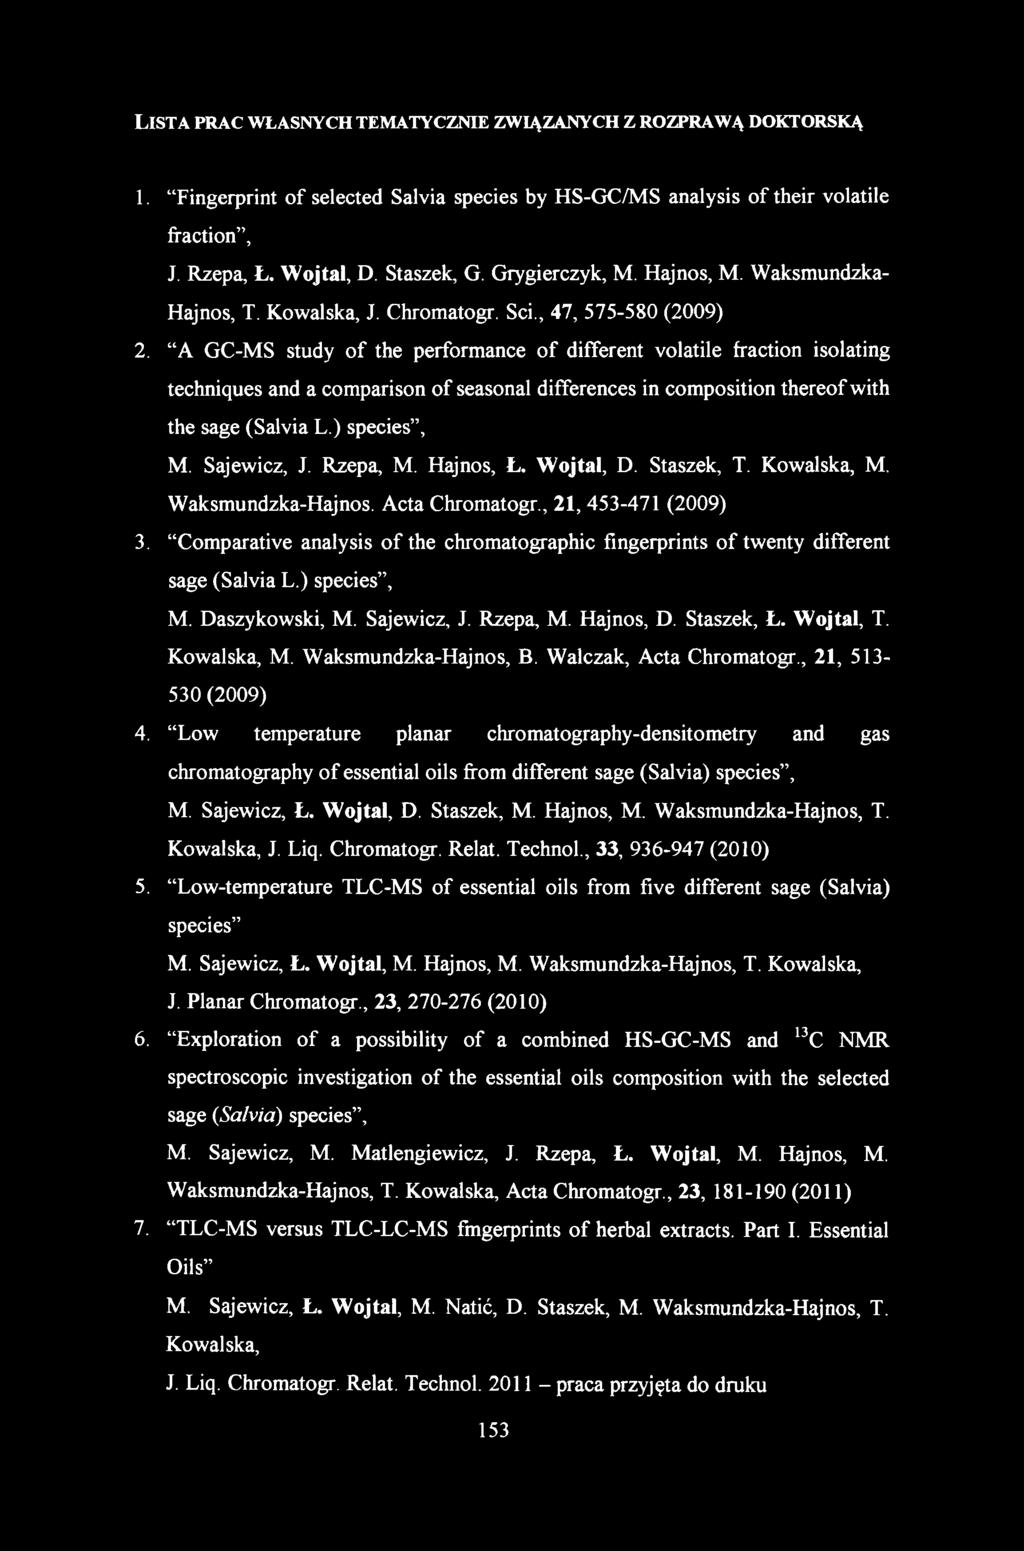 1. Fingerprint of selected Salvia species by HS-GC/MS analysis of their volatile fraction, J. Rzepa, Ł. Wojtal, D. Staszek, G. Grygierczyk, M. Hajnos, M. Waksmundzka- Hajnos, T. Kowalska, J.